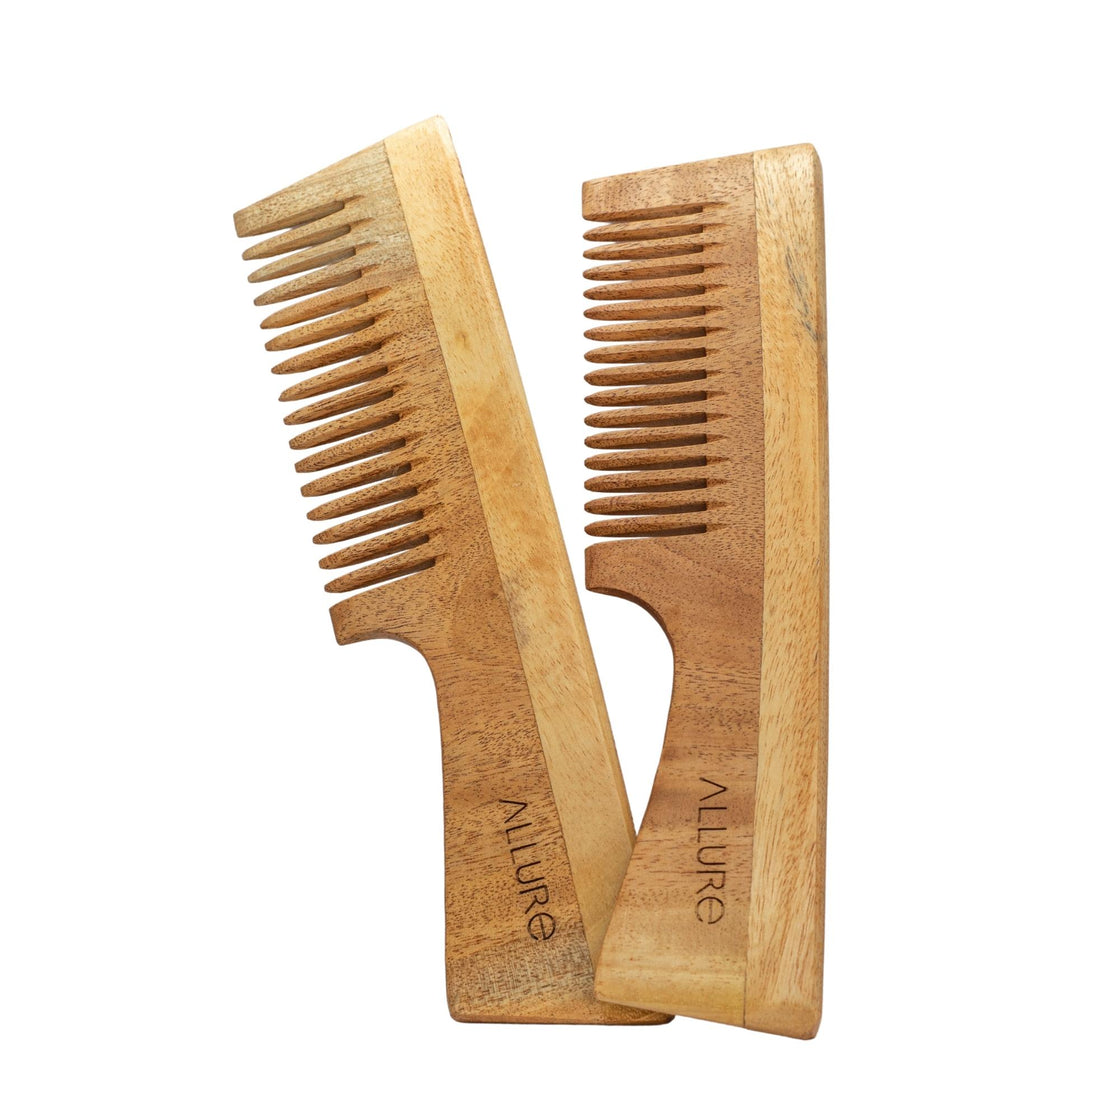 Allure Neem Wood Detangle Hair Combs (CD-02) Pack of 2